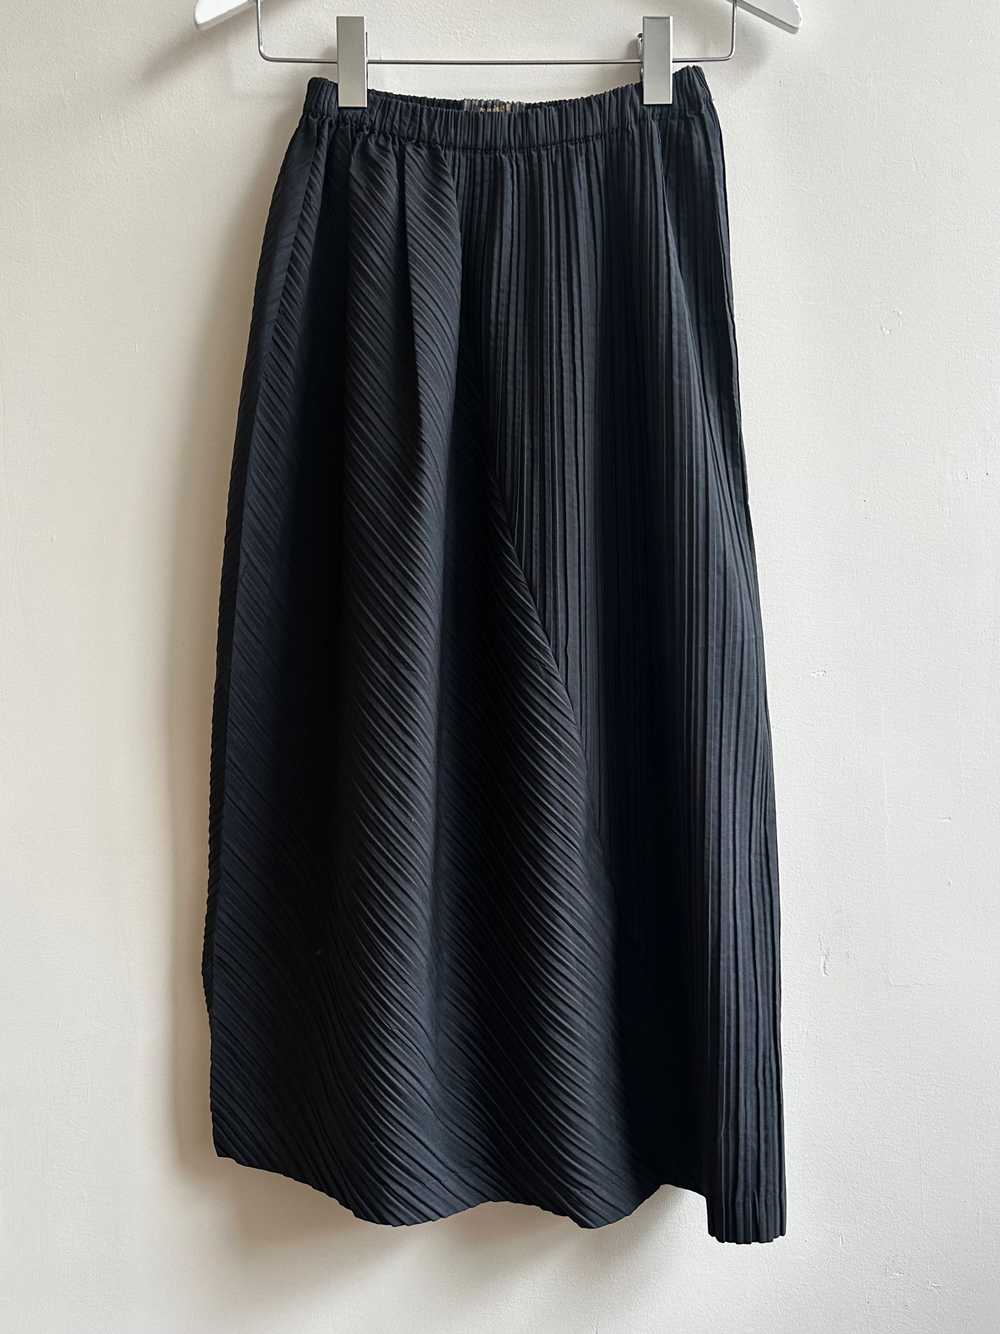 Vintage Issey Miyake Pleated Black Skirt Size Sma… - image 1